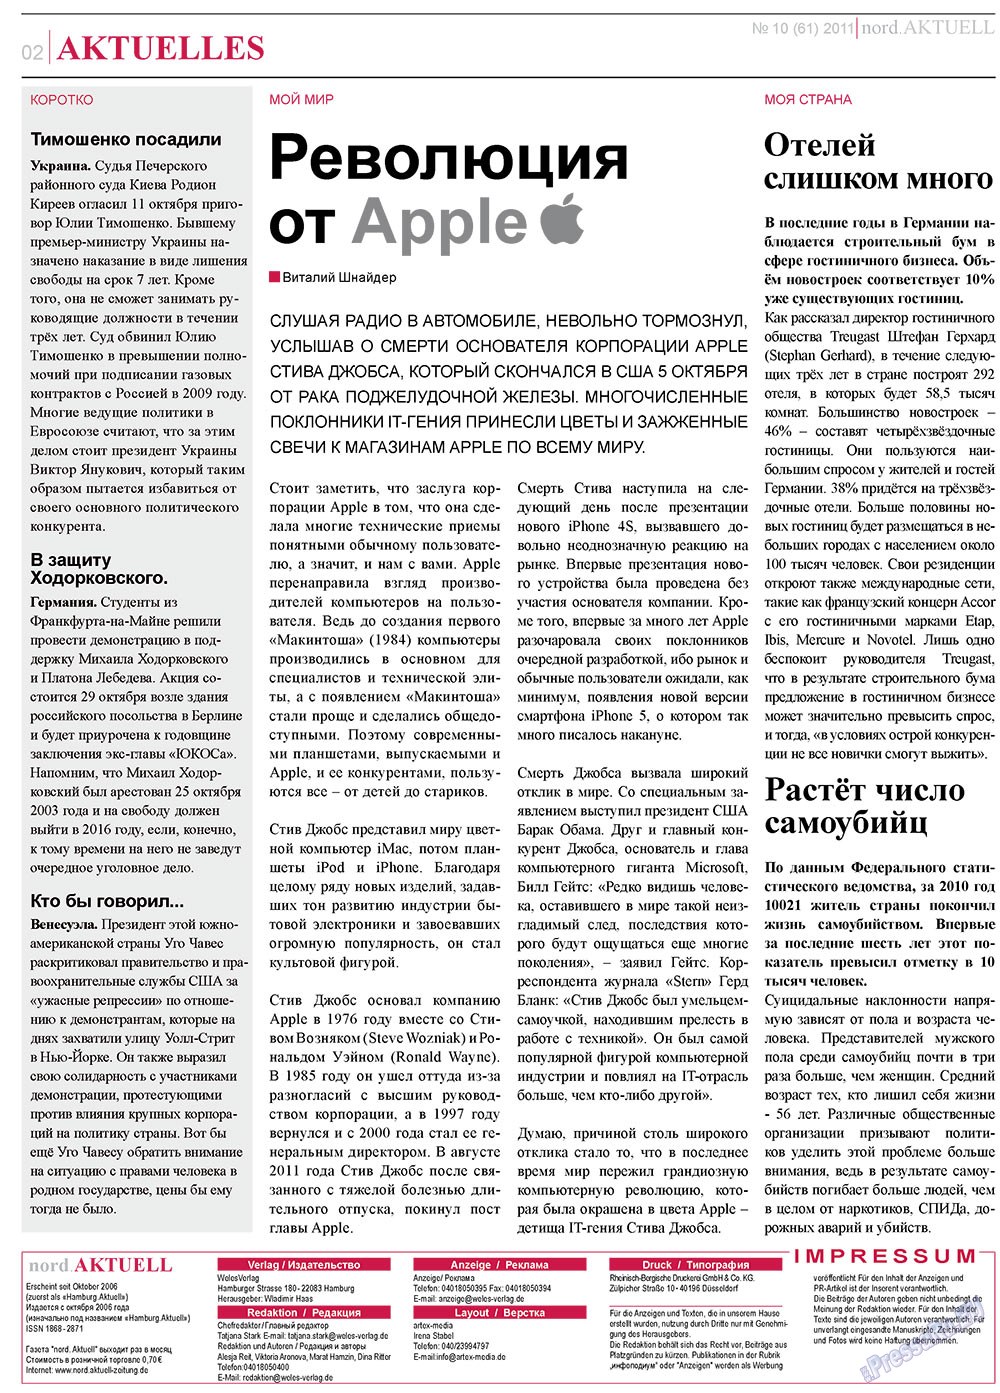 nord.Aktuell, газета. 2011 №10 стр.2